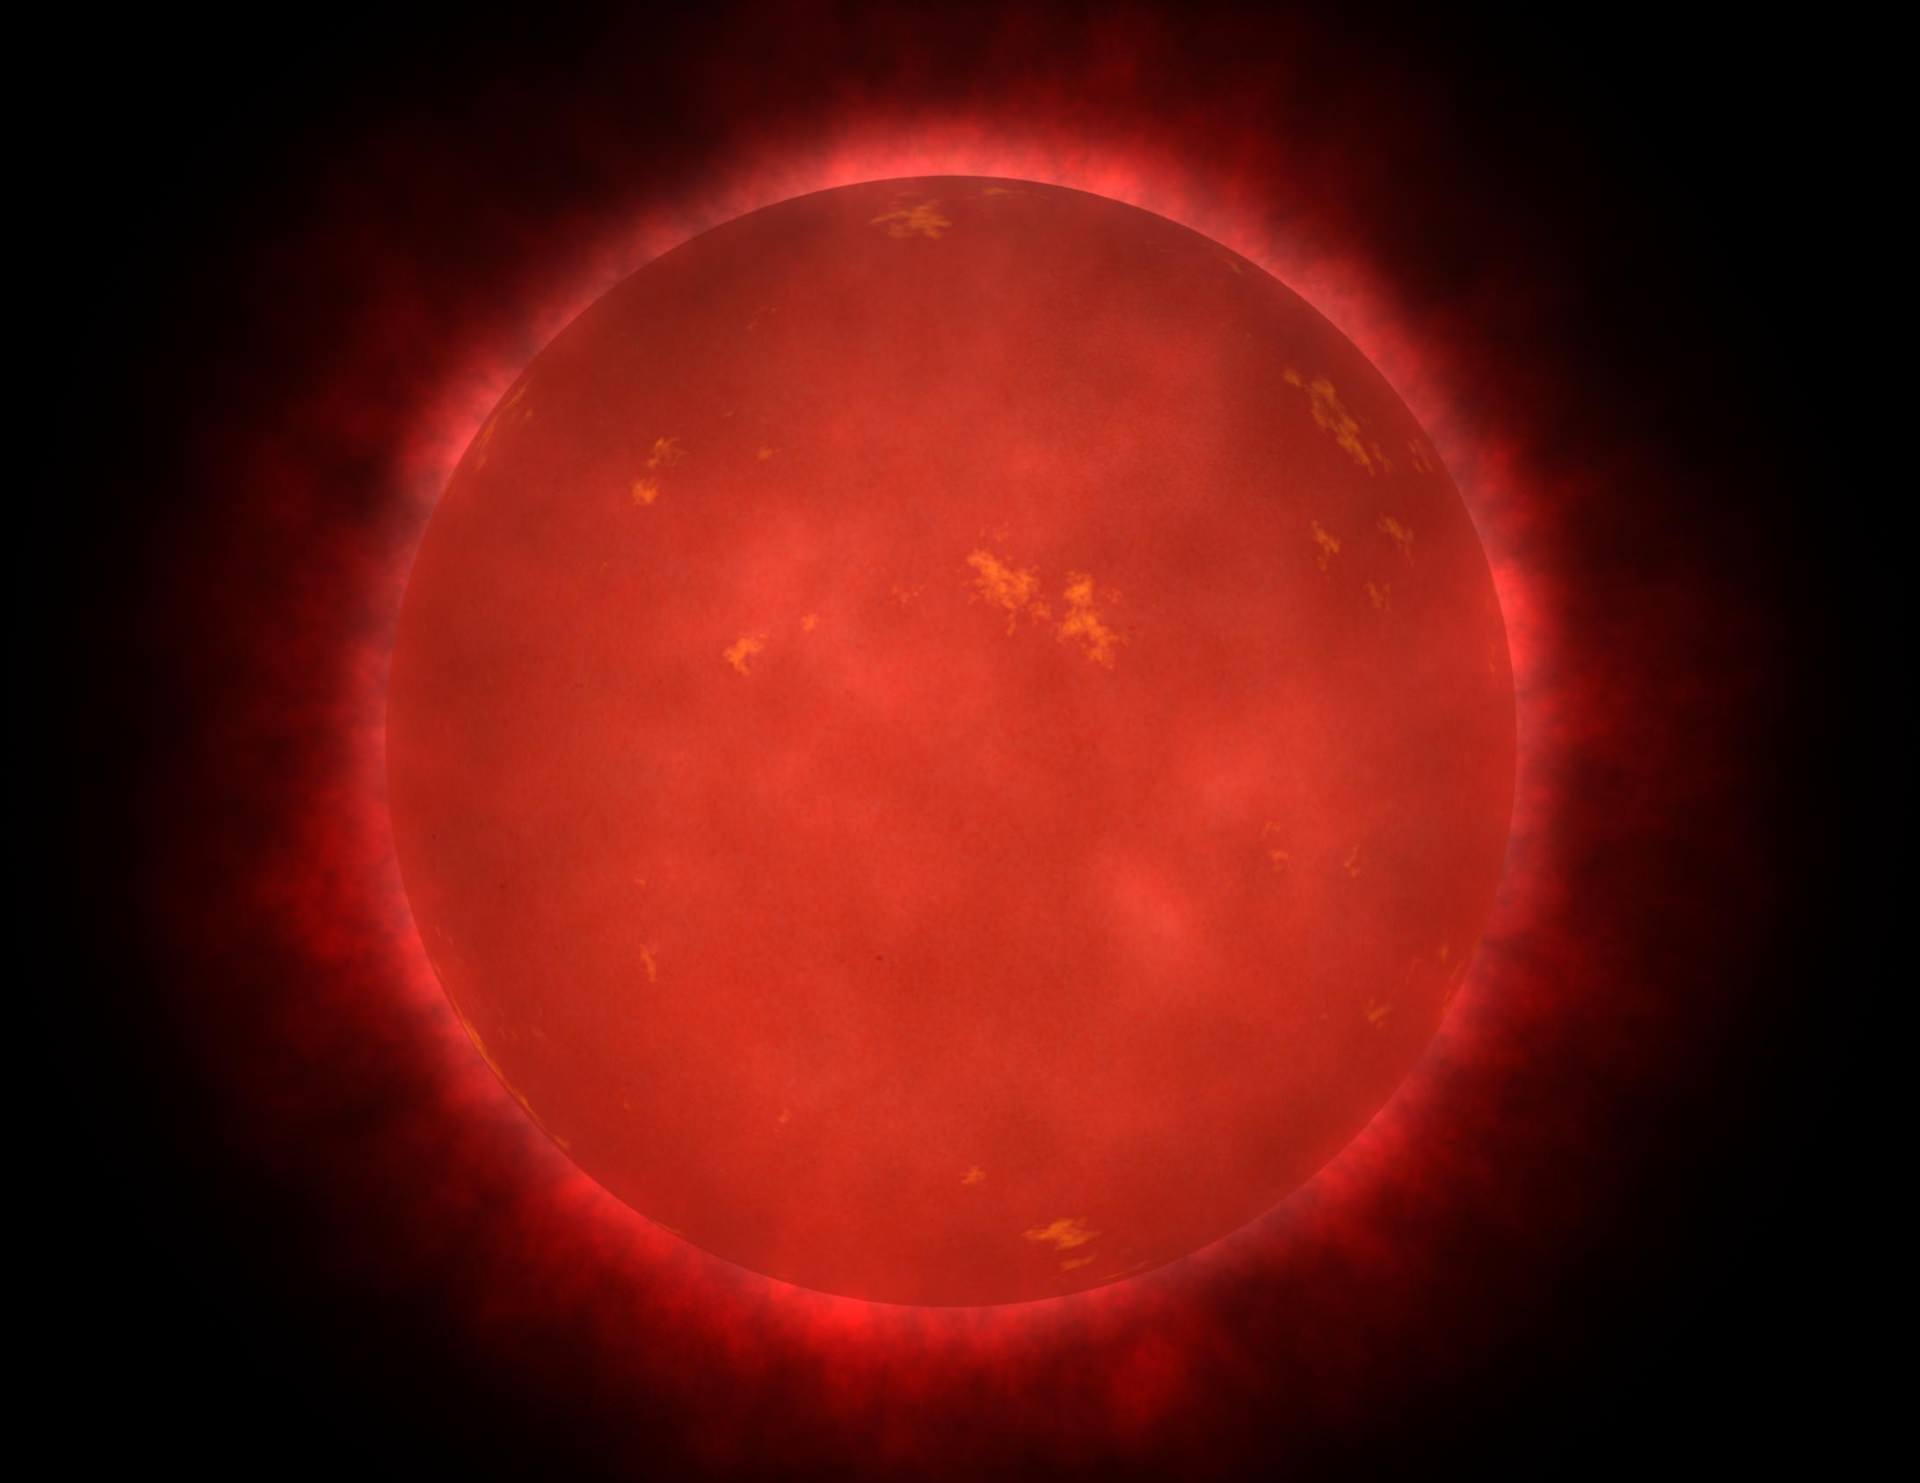 Artist's impression of a red giant star. Credit:NASA/ Walt Feimer